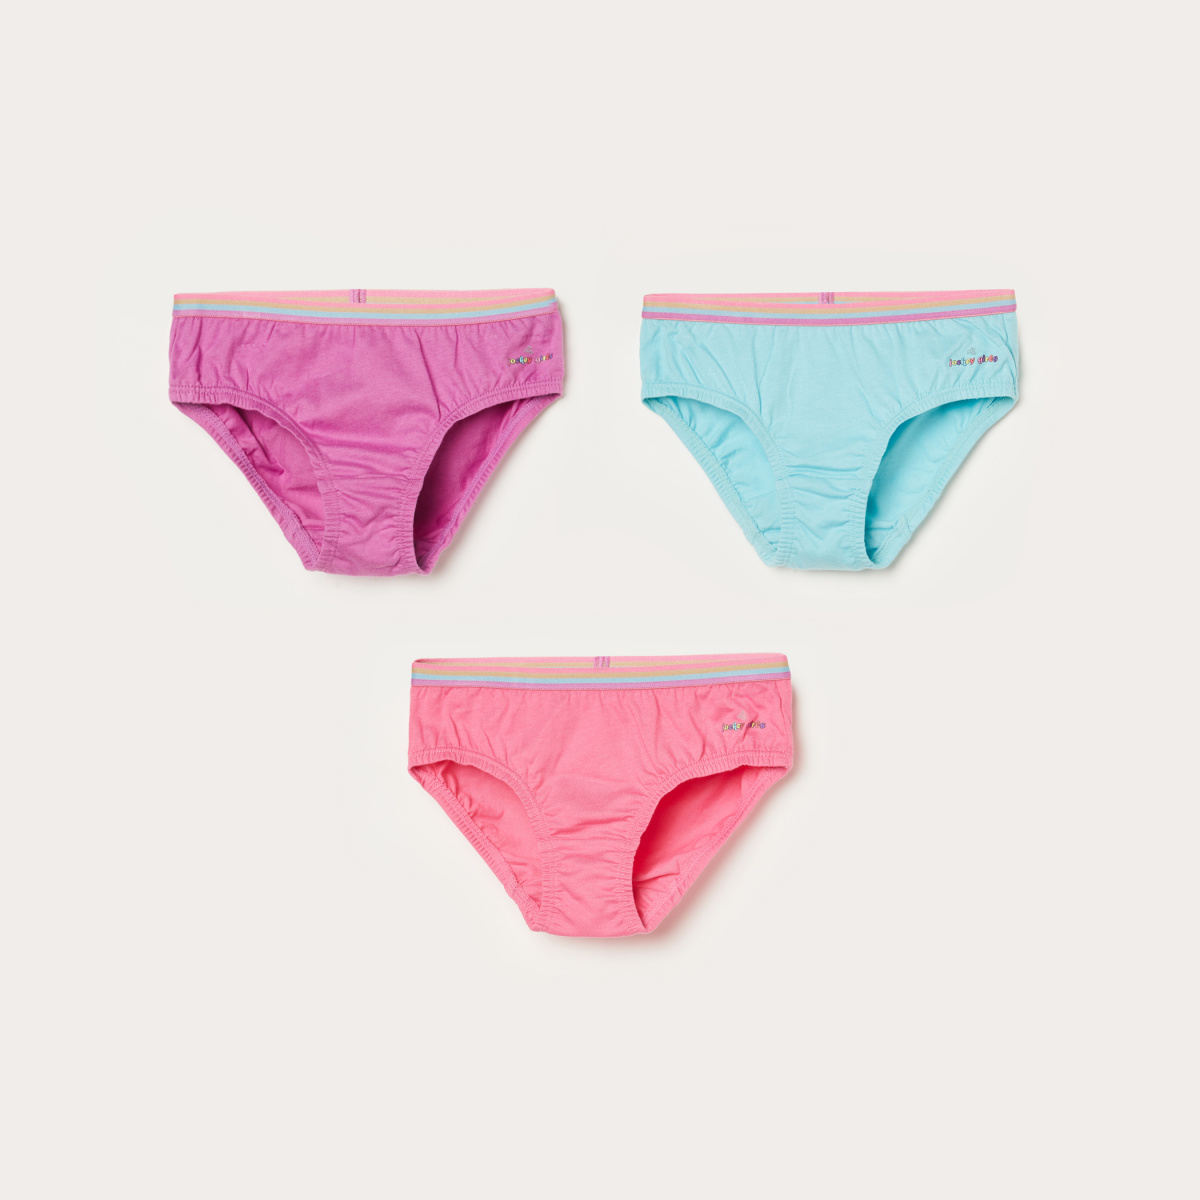 JOCKEY Girls Solid Panties- Pack of 3, Lifestyle Stores